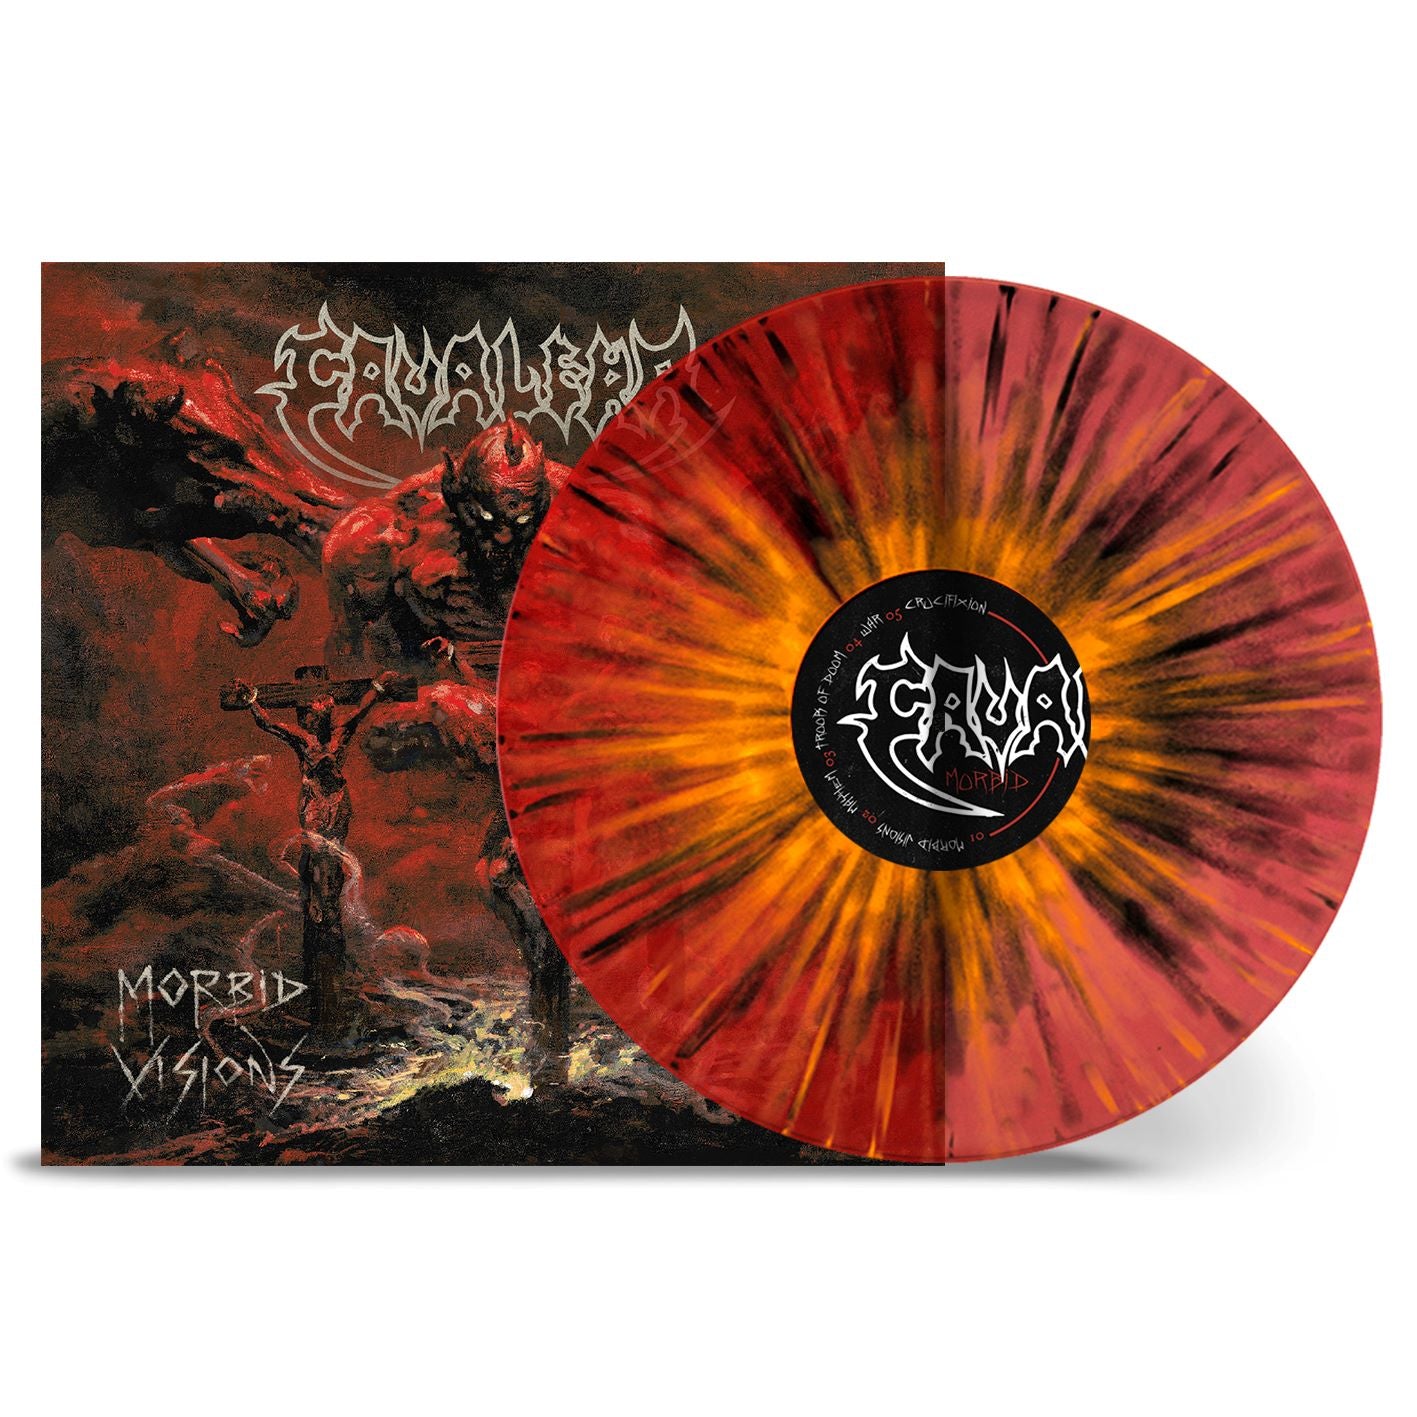 Cavelera - Morbid Vision: Trans Red Orange Black Splatter Vinyl LP